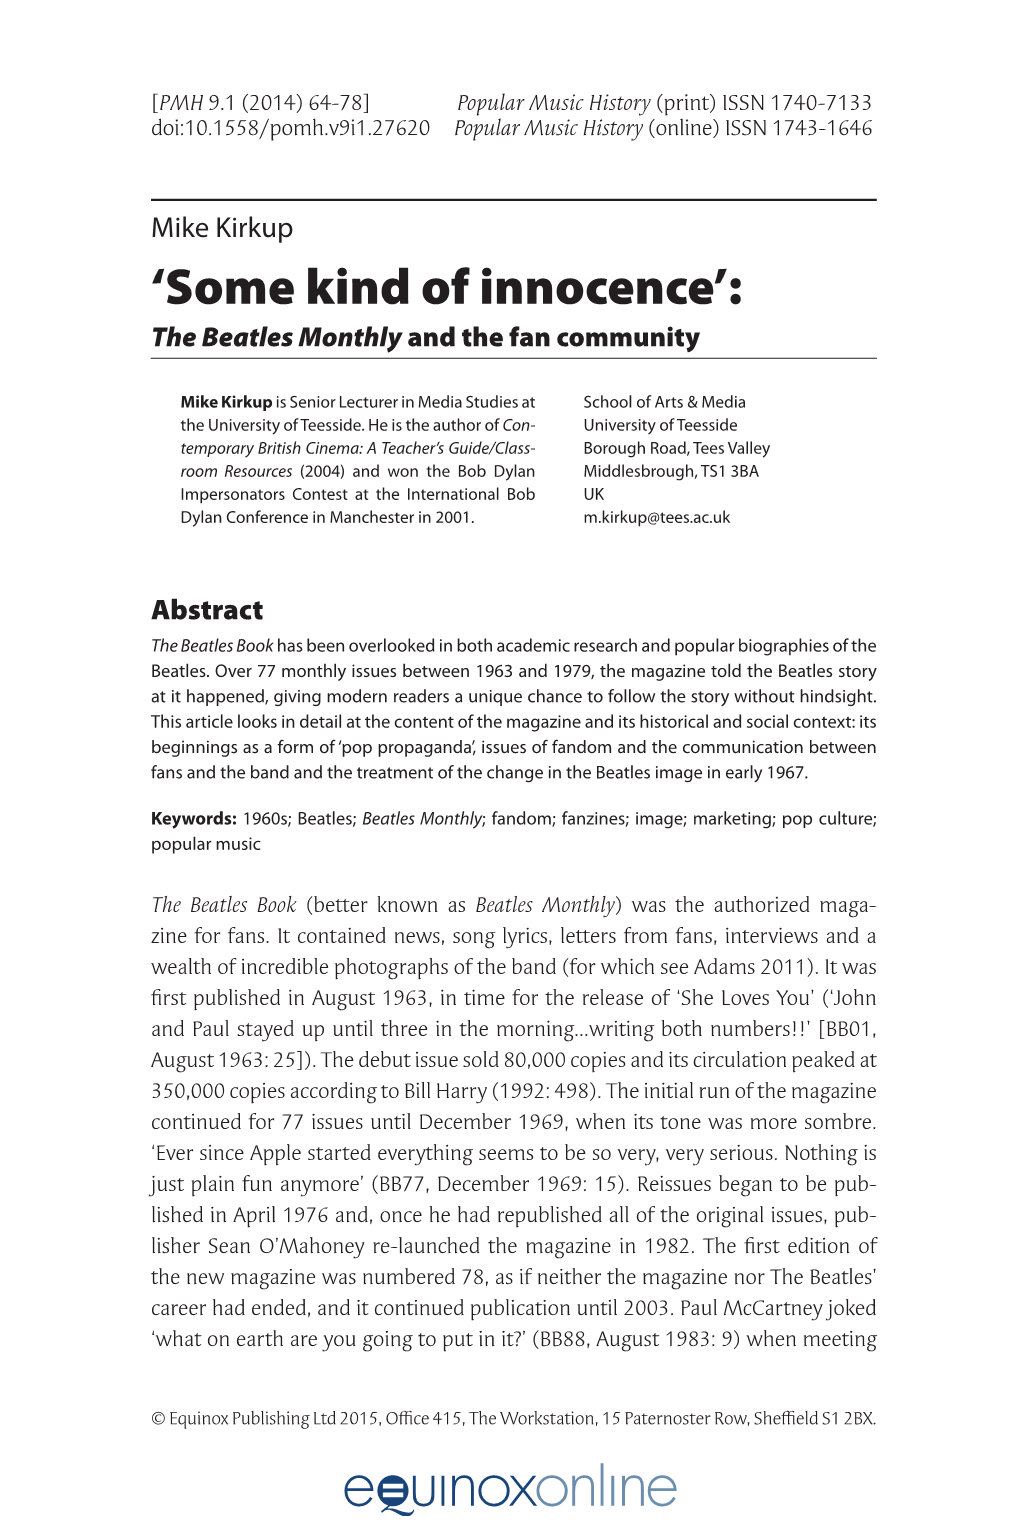 'Some Kind of Innocence'